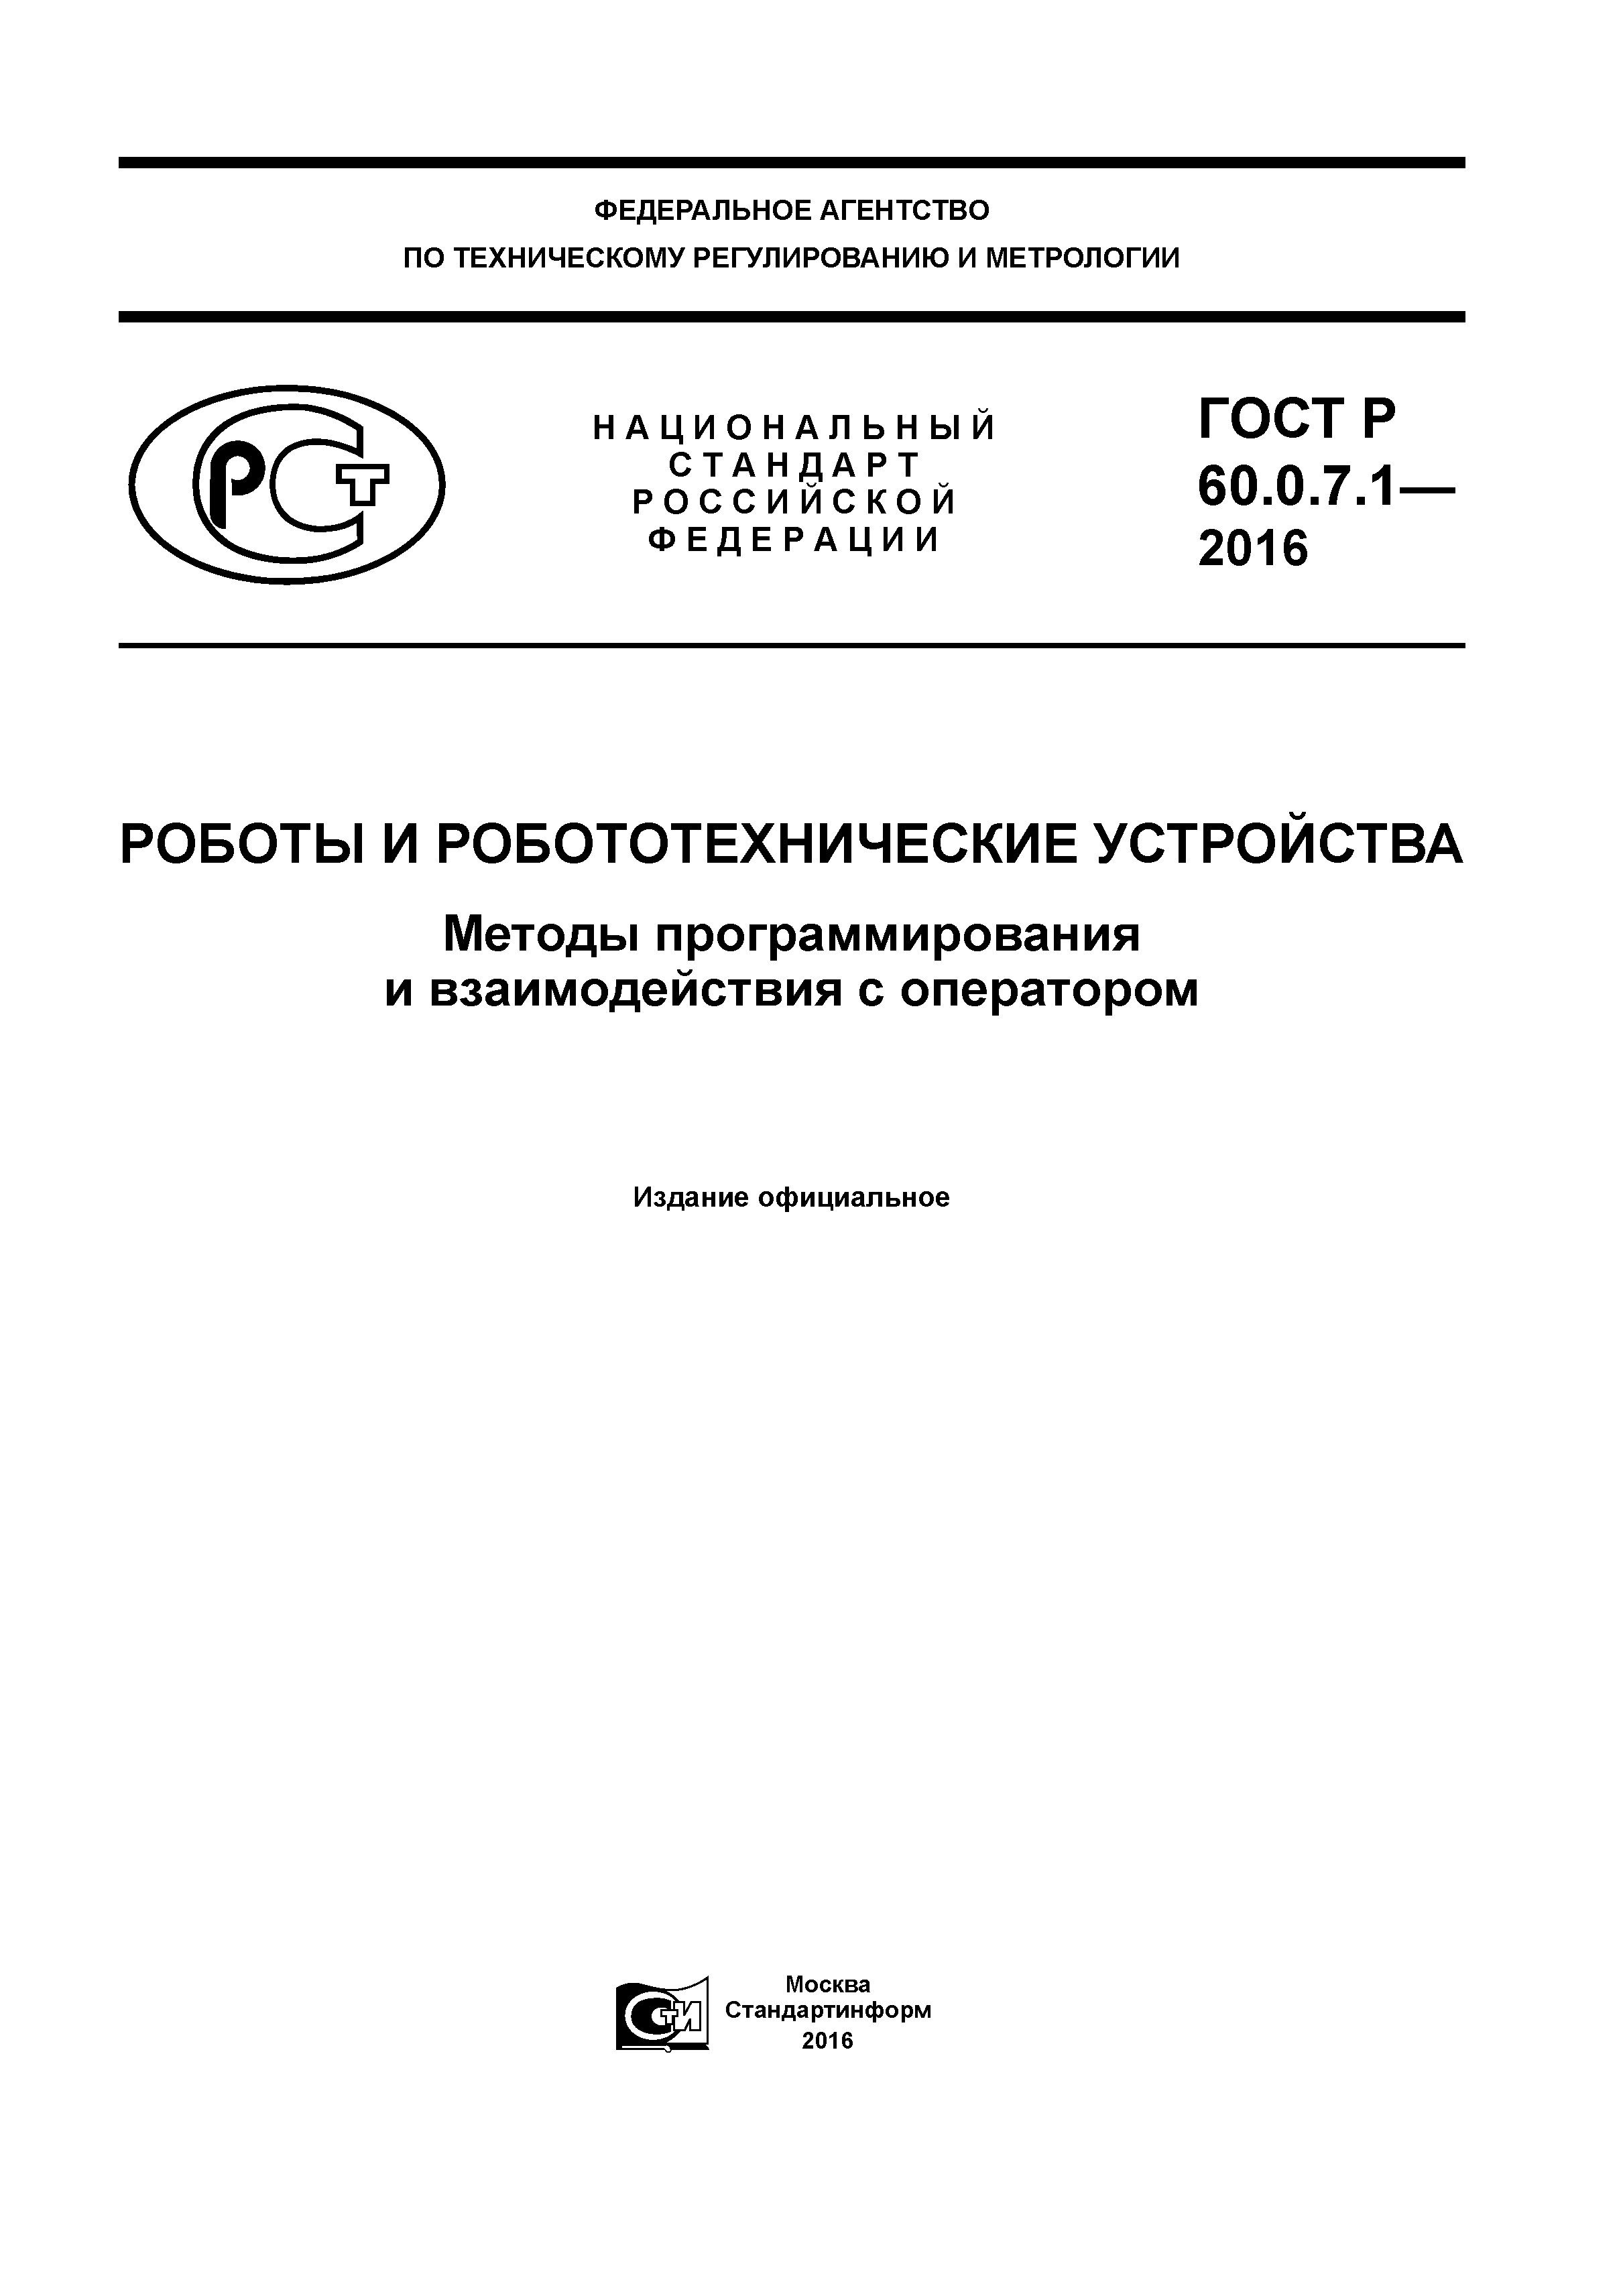 ГОСТ Р 60.0.7.1-2016